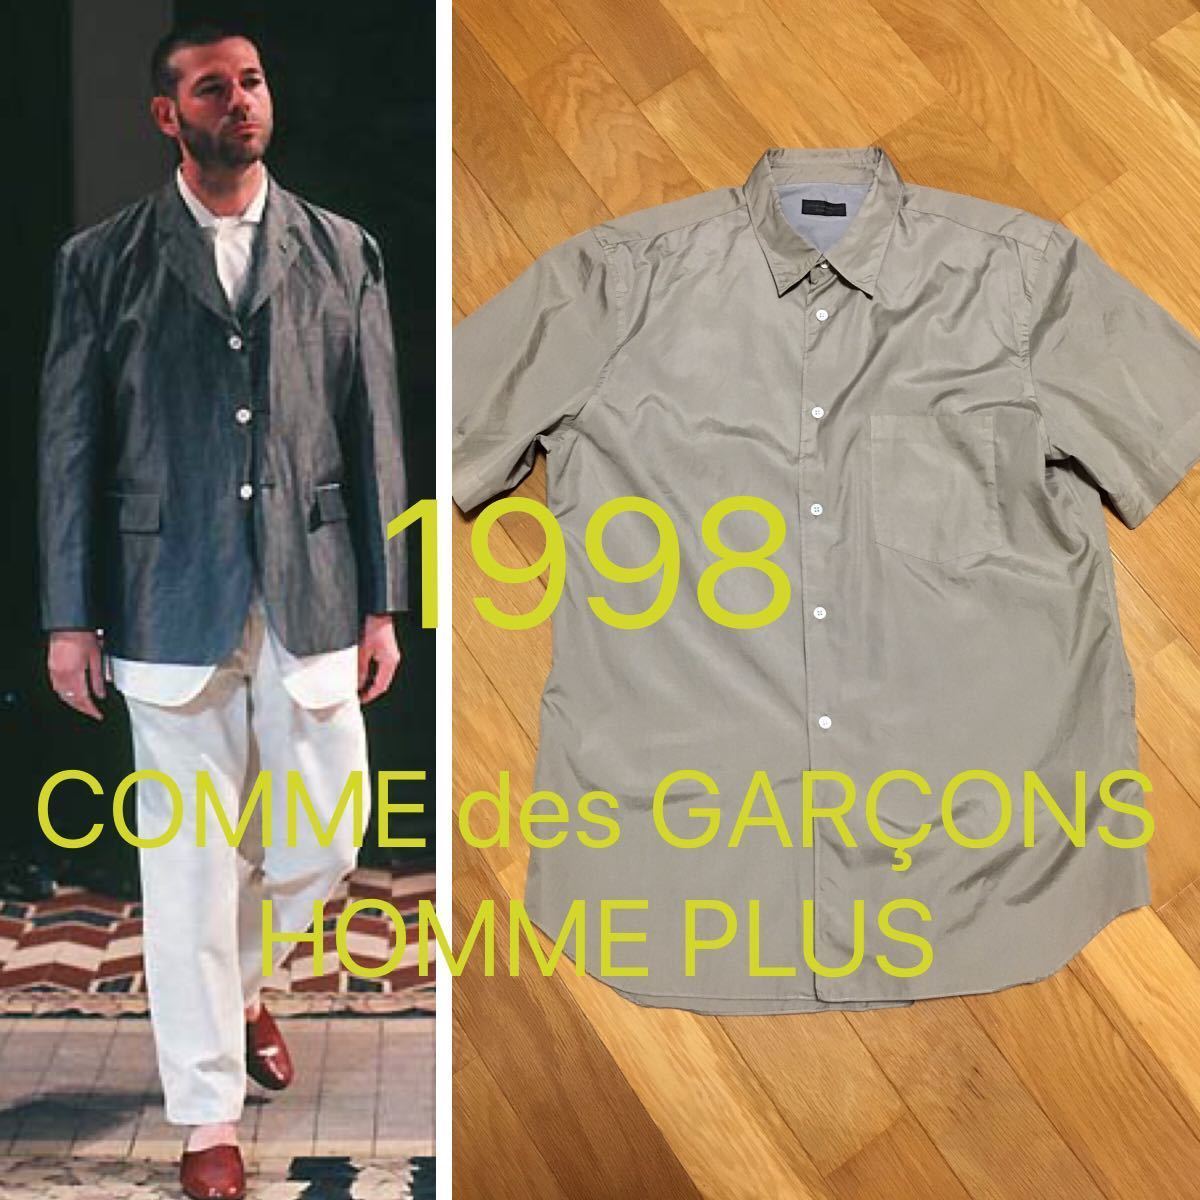  new same *1998 Vintage Comme des Garcons Homme pryuscomme des garcons Vintage Archive archive Rei Kawakubo homme plussi-m